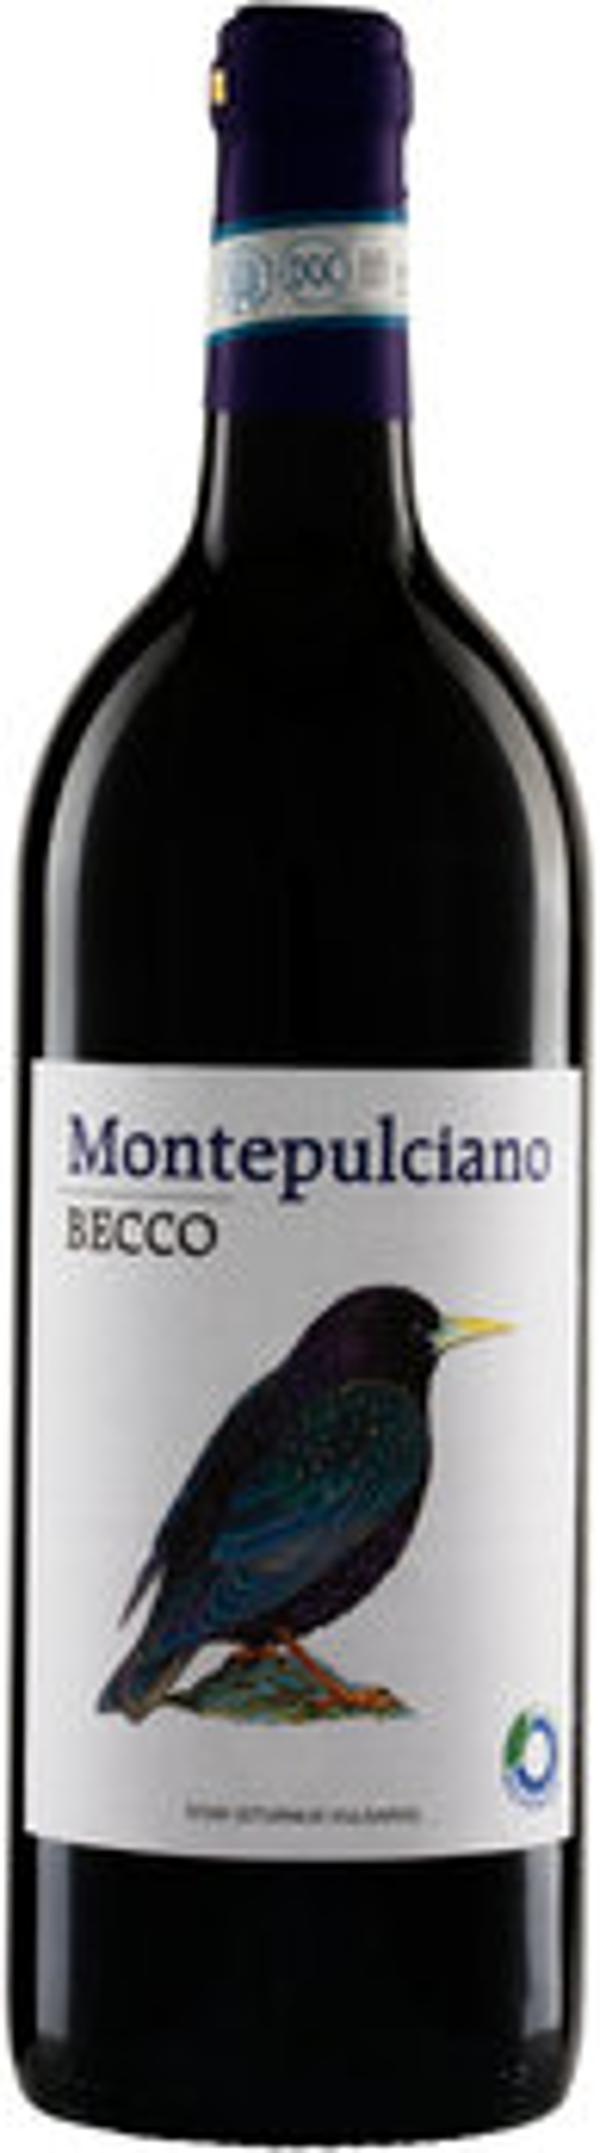 Produktfoto zu Becco Montepulciano rot, 1 l